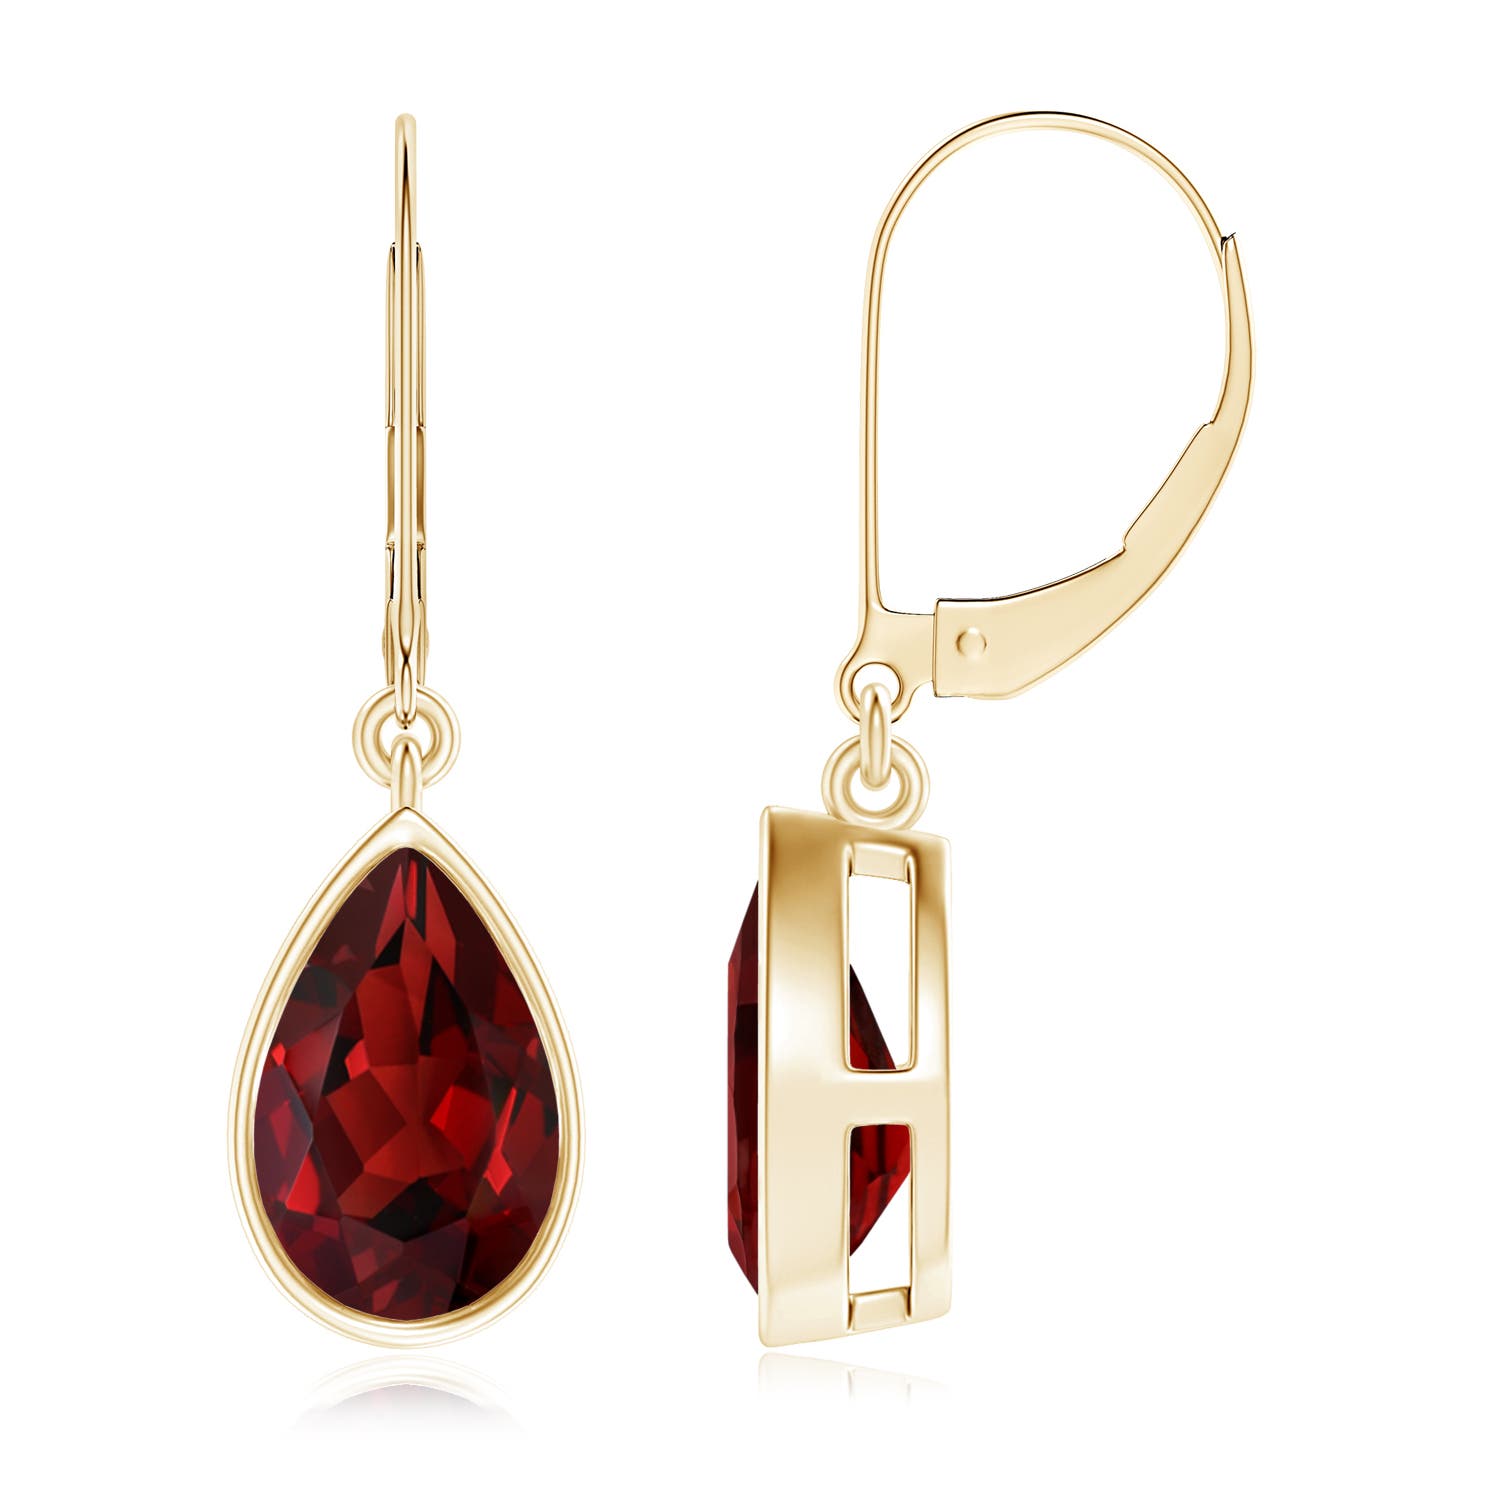 Shop Garnet Jewelry with Unique Designs | Angara